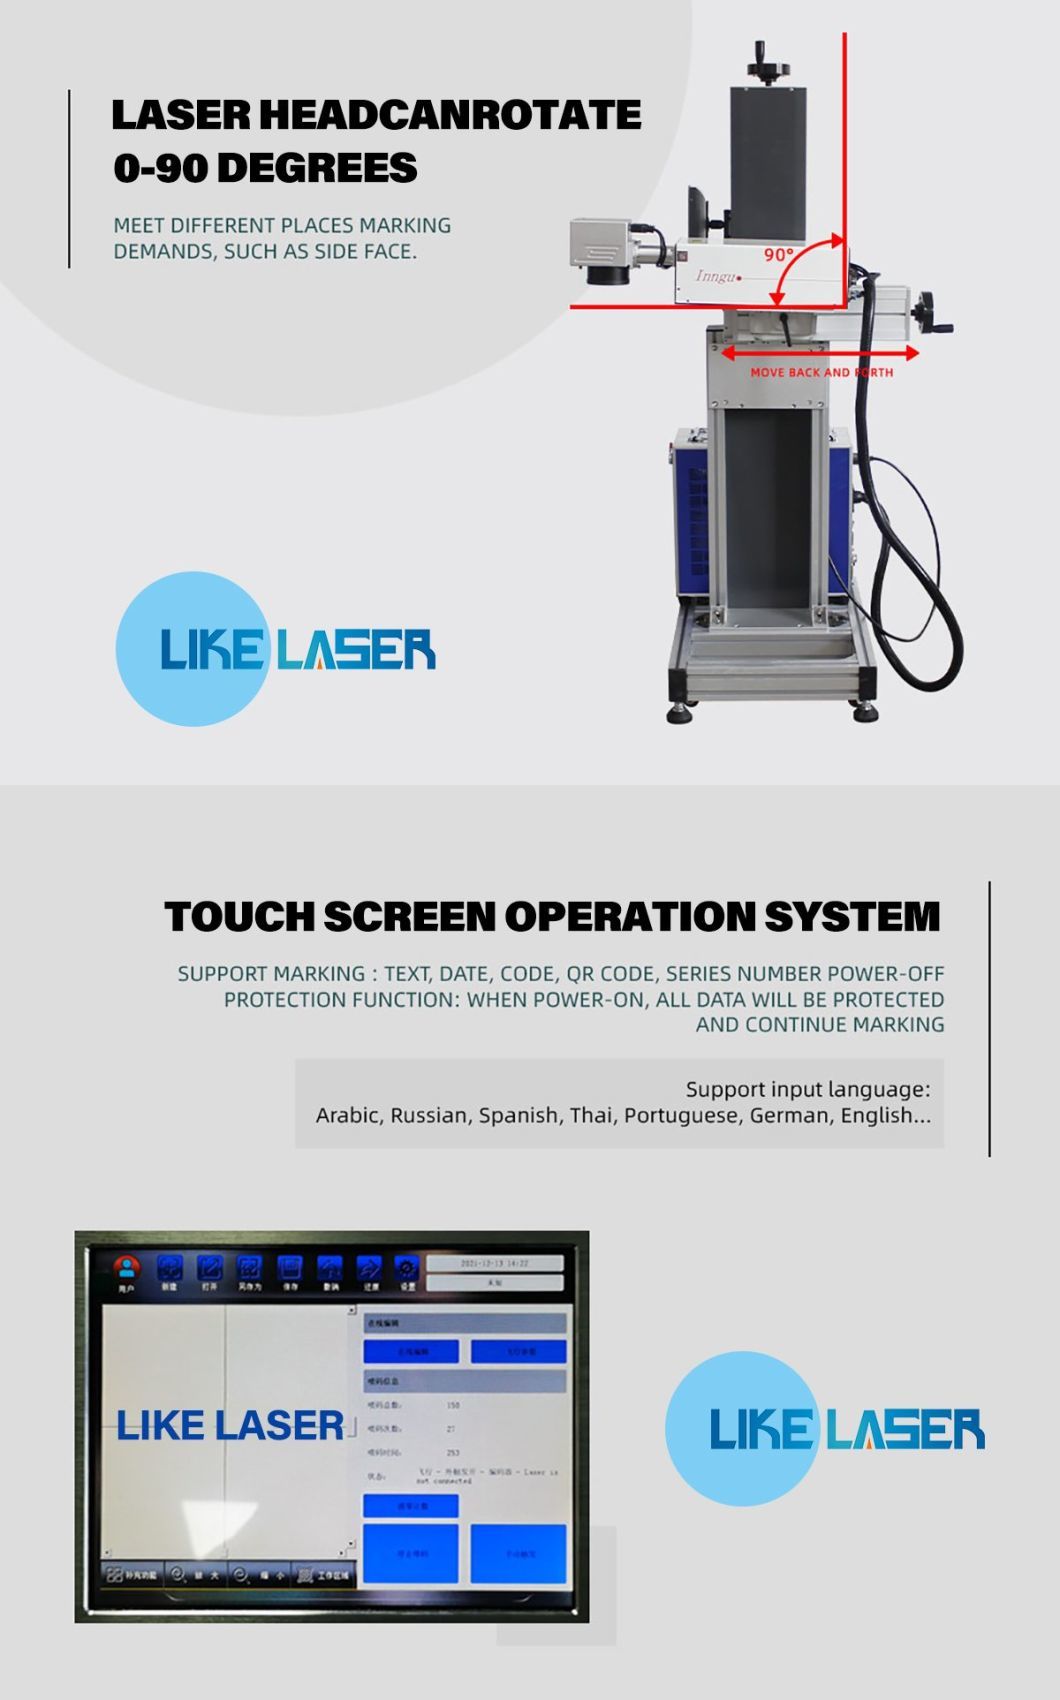 Mass Production High Performance Fiber Online Flying Laser Marking Machine for Tube Wire PVC Laser Printer